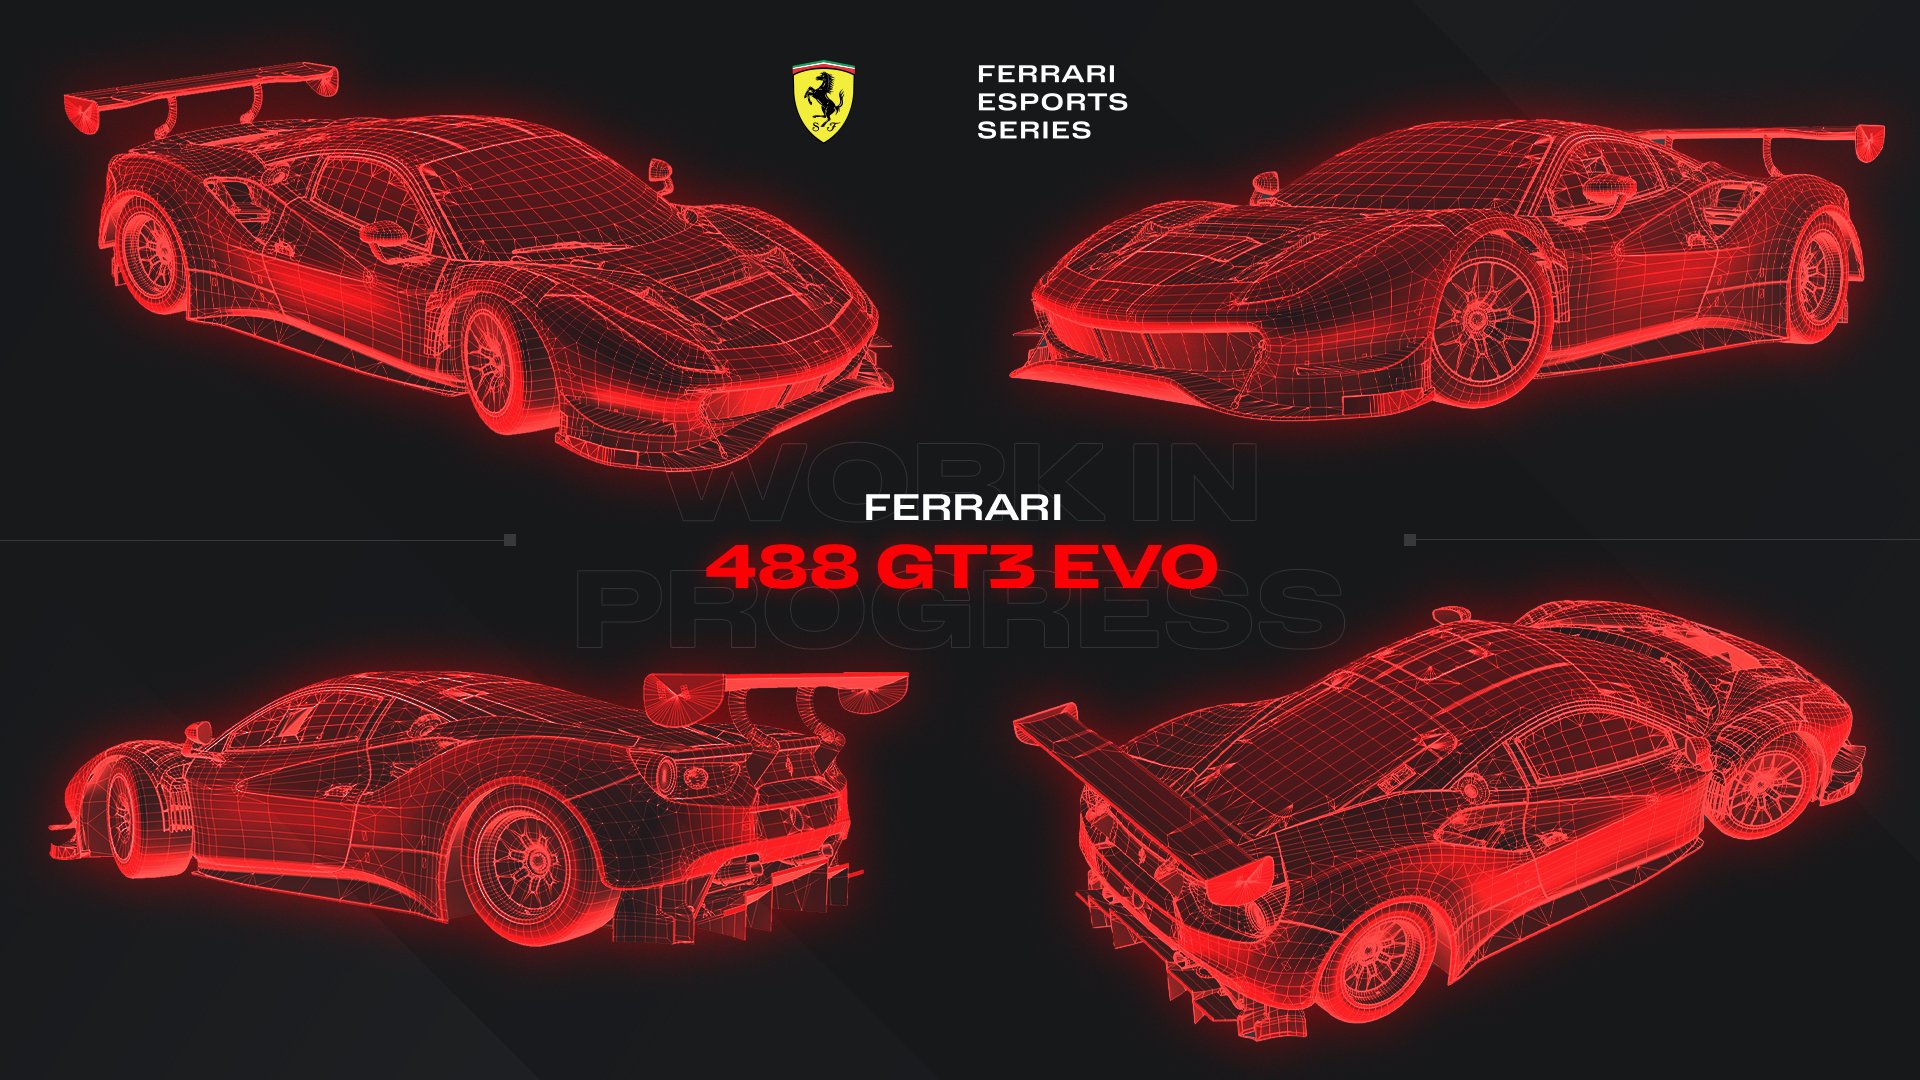 Ferrari 488 Gt3 Evo Wallpapers